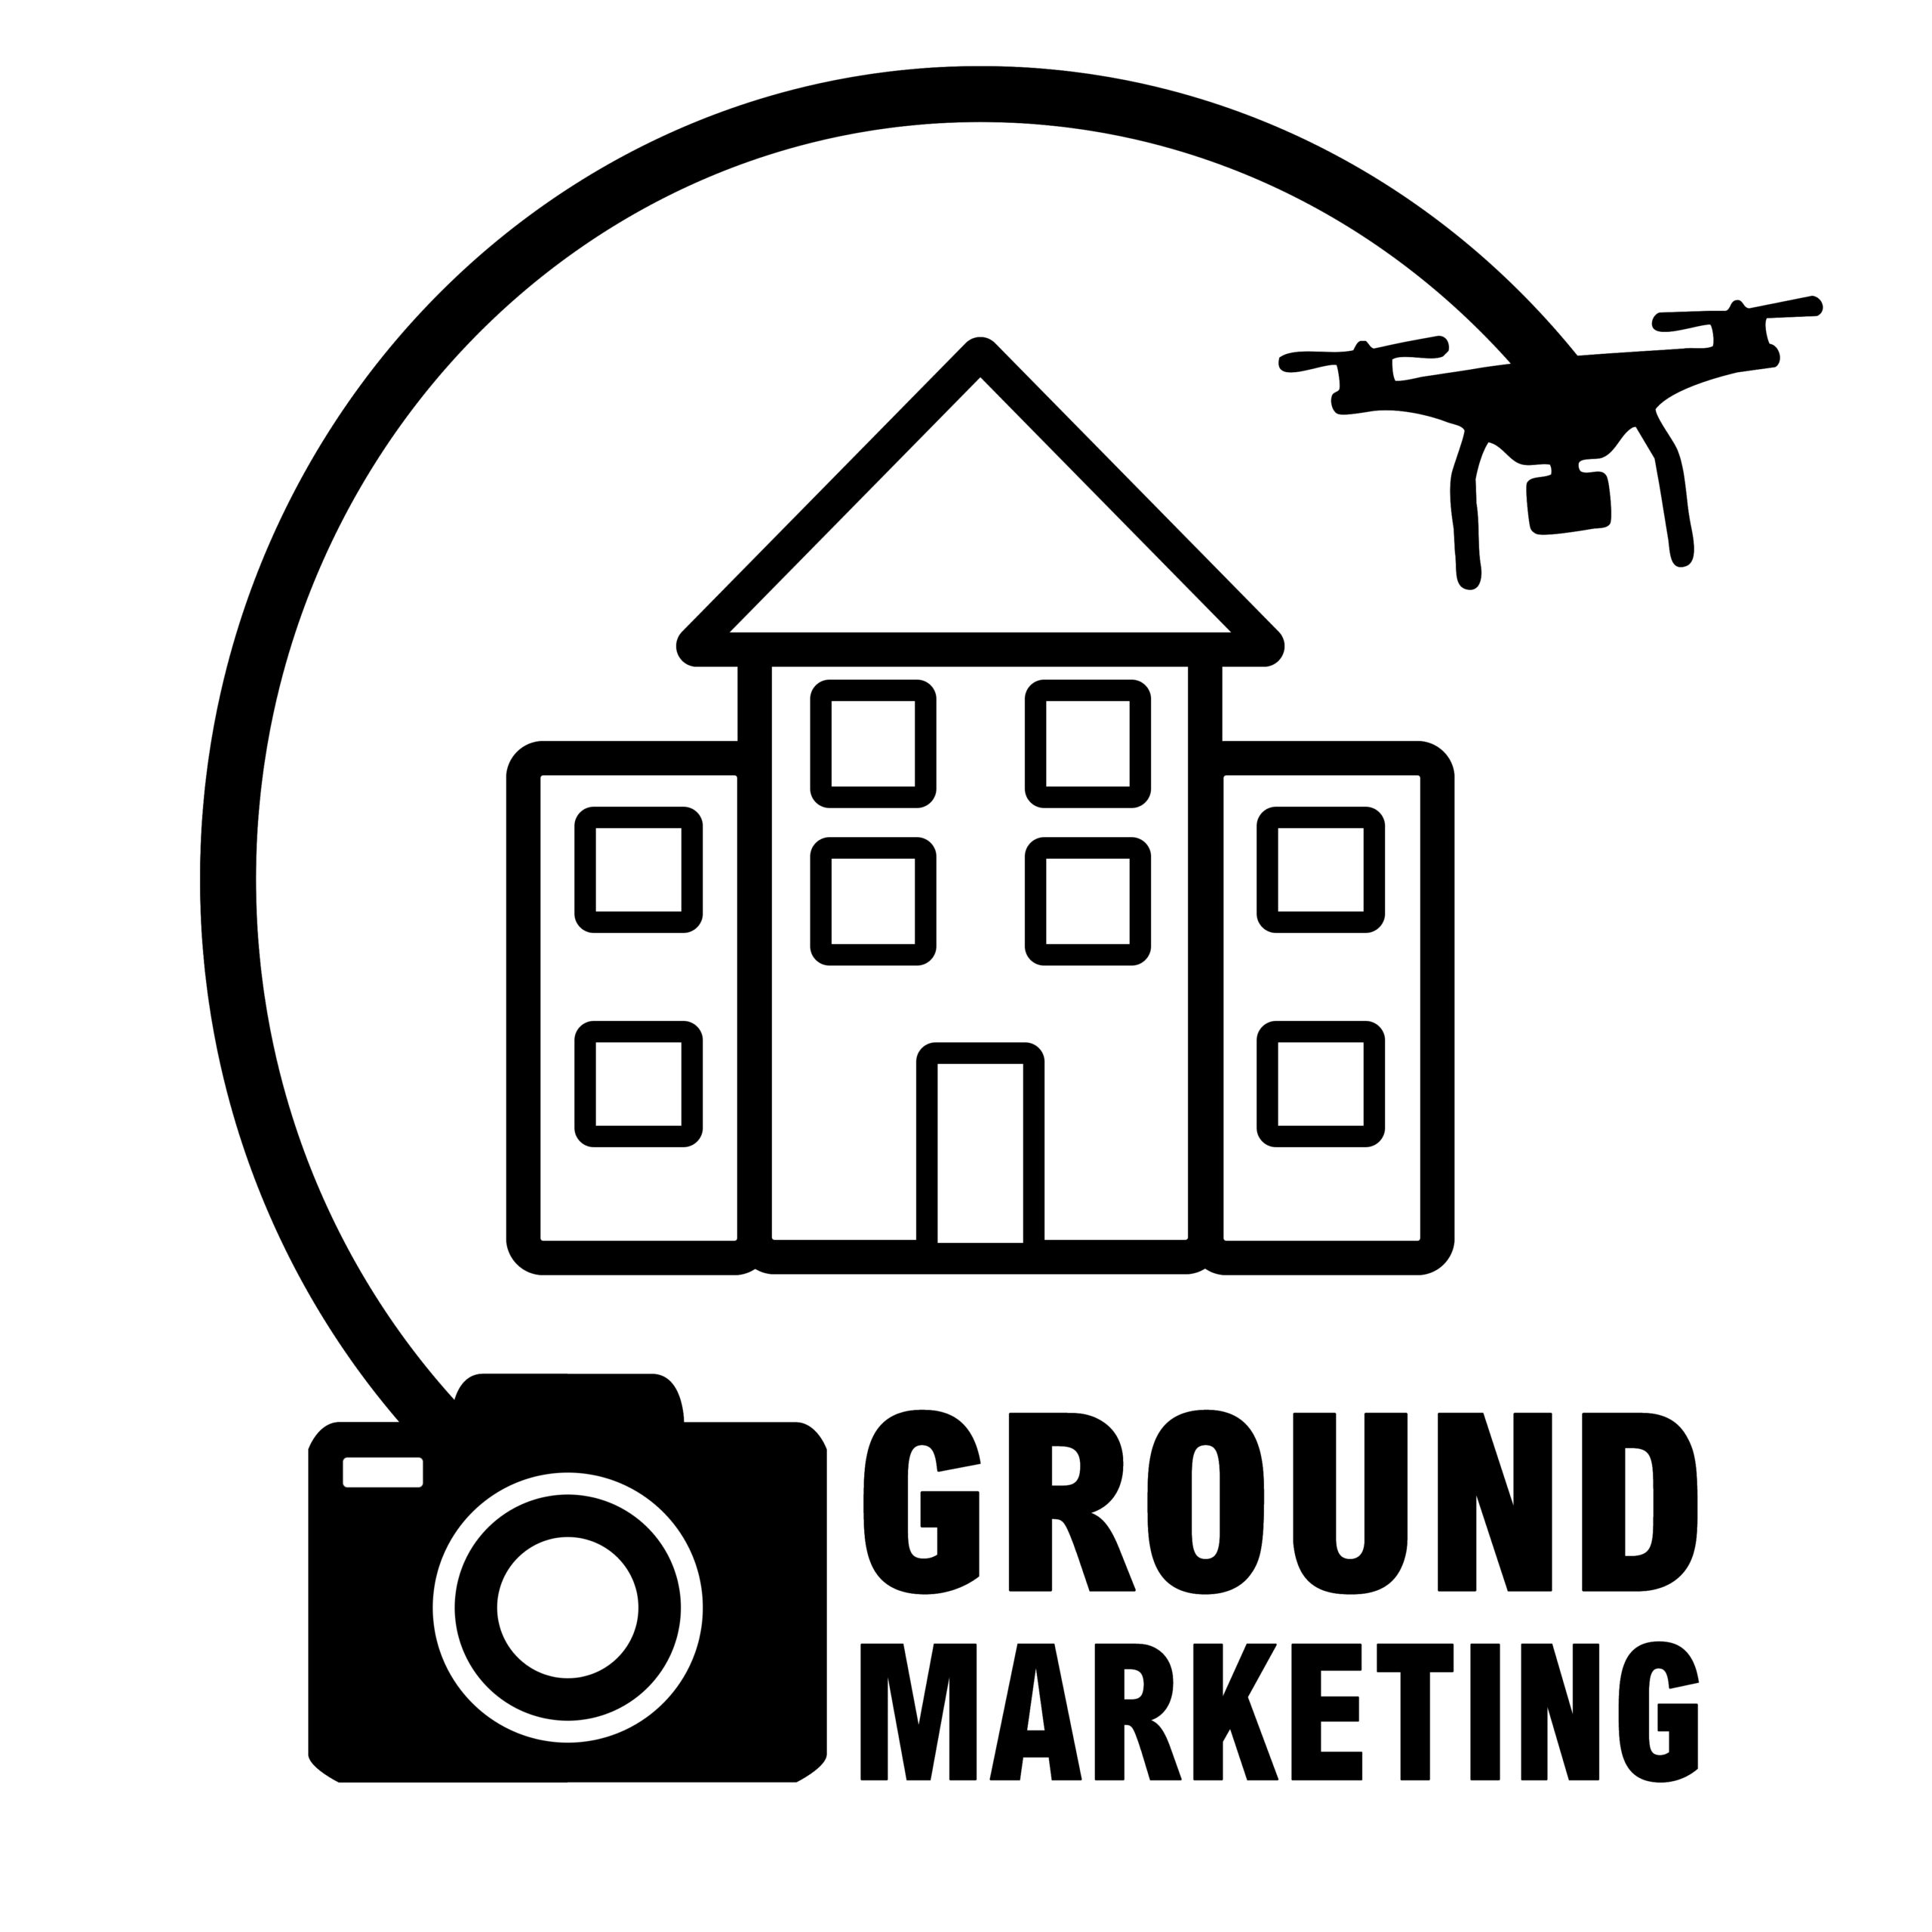 Ground Marketing